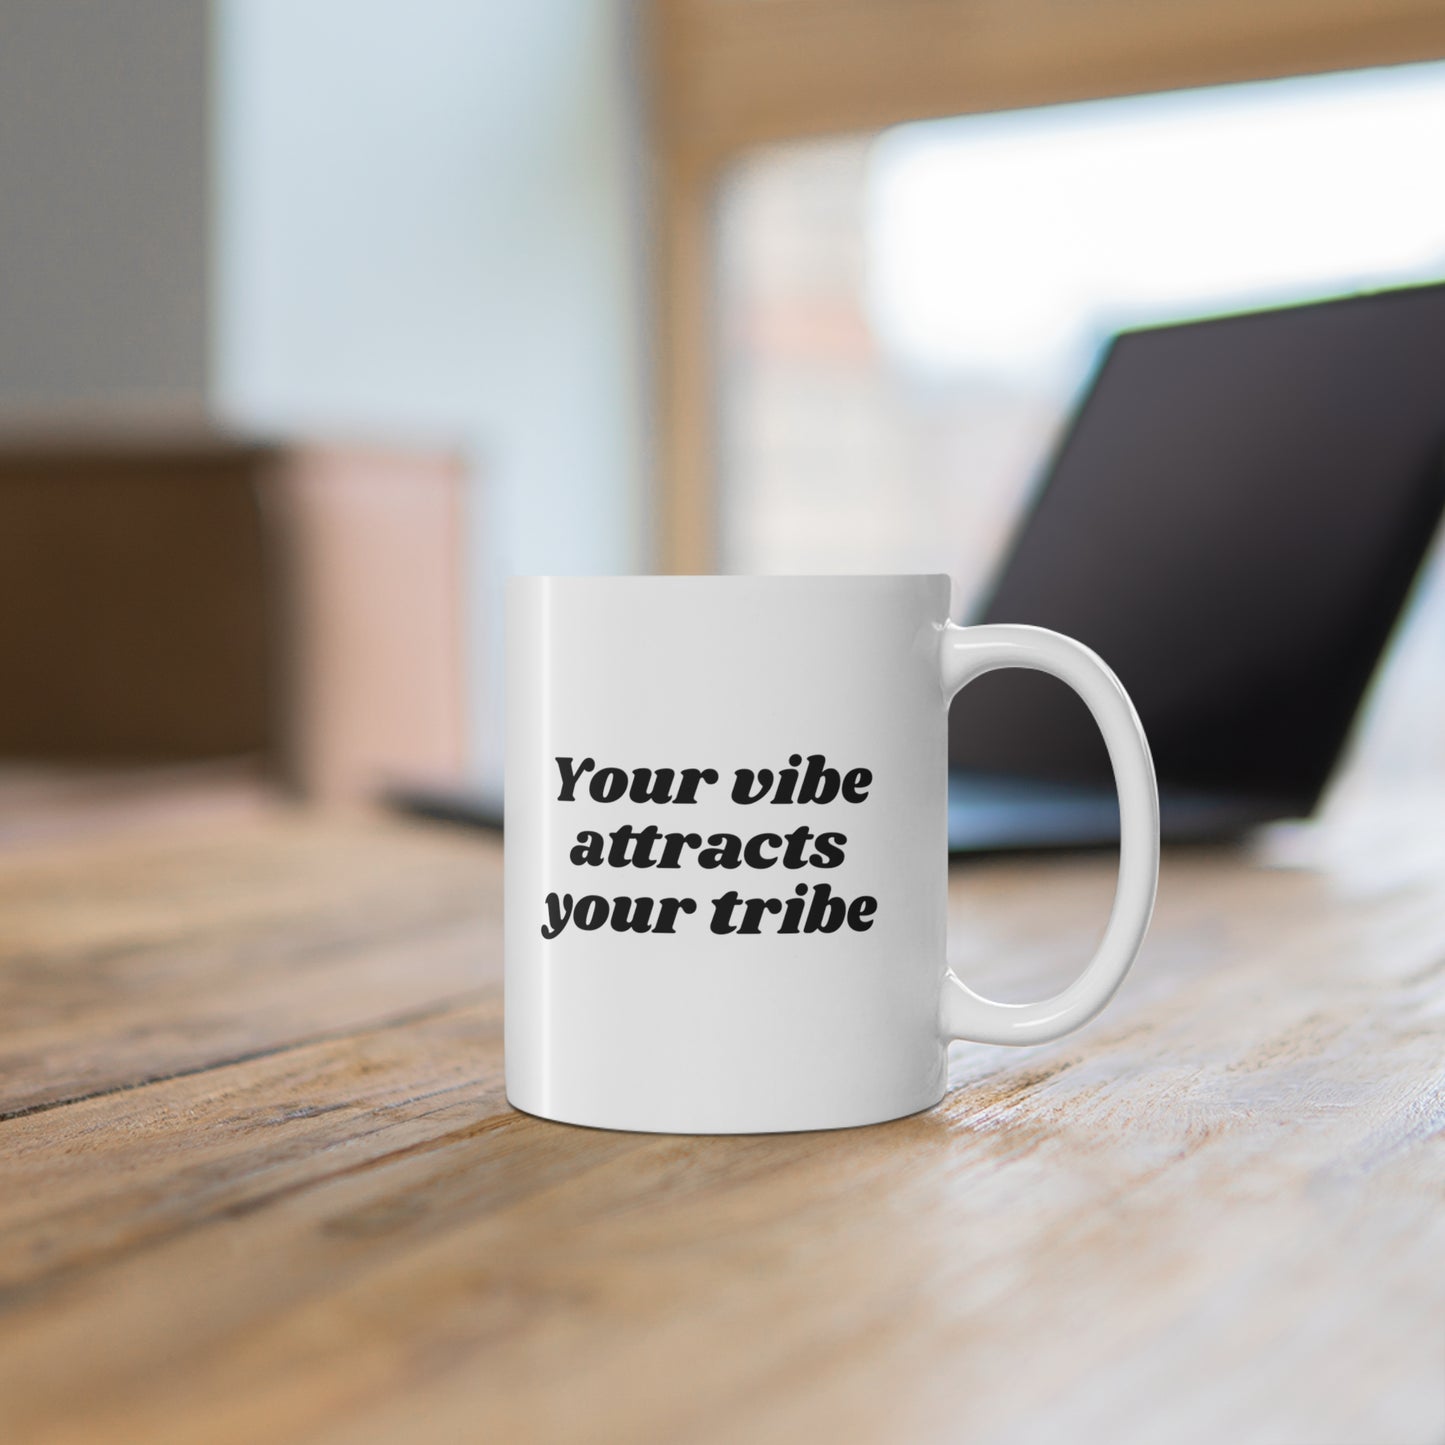 Your Vibe Attracts Tour Tribe Coffee Ceramic Mug 11oz